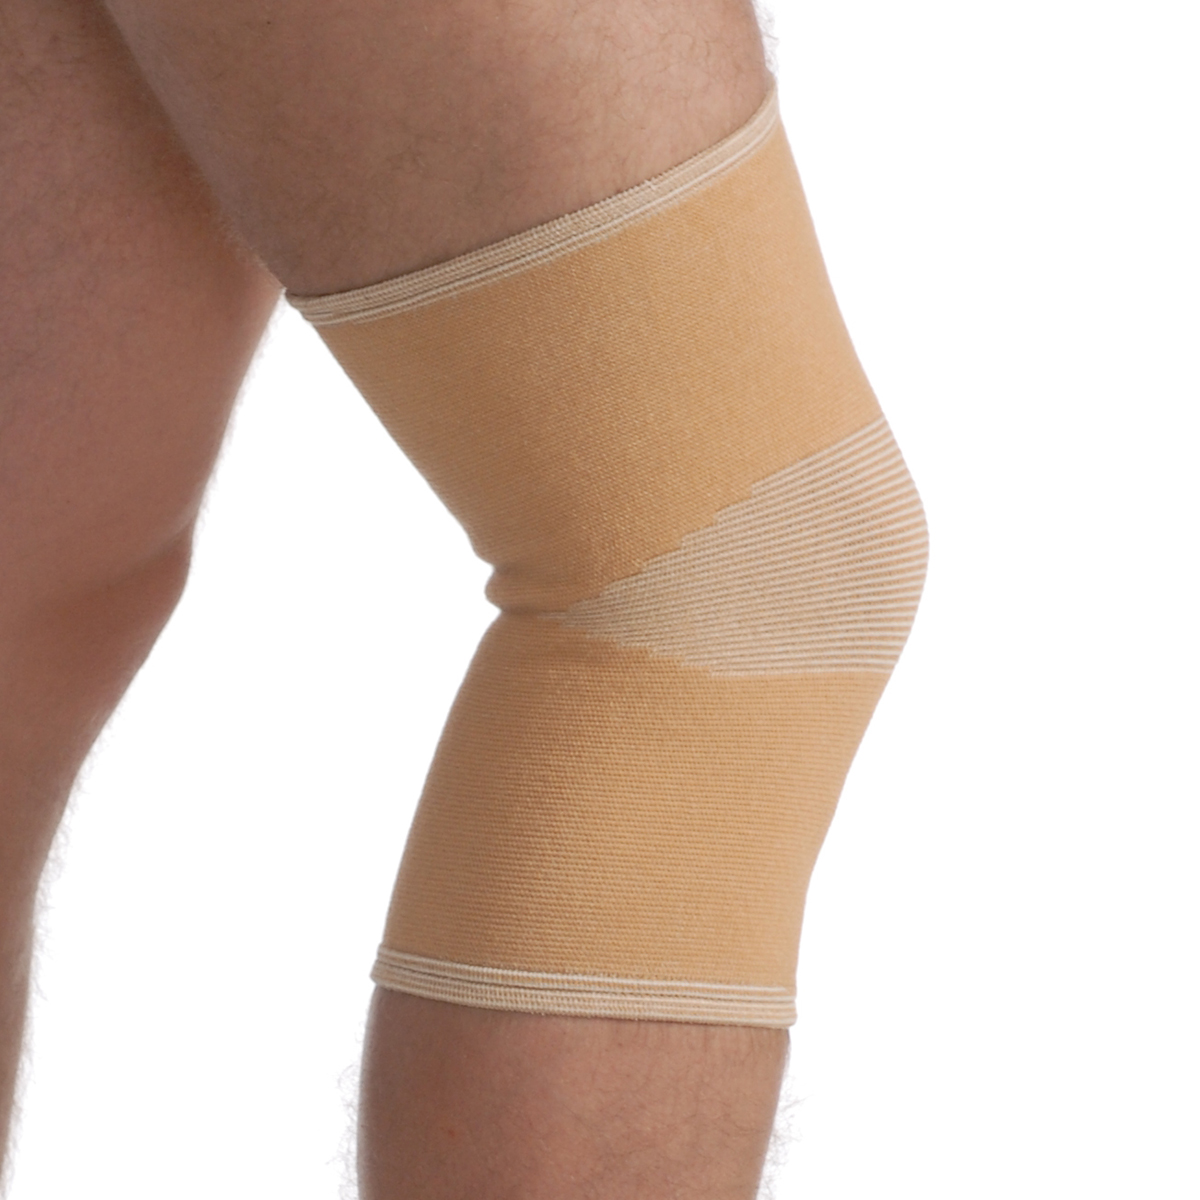 Bandáž kolene elastická béžová, Medtextile, 6002